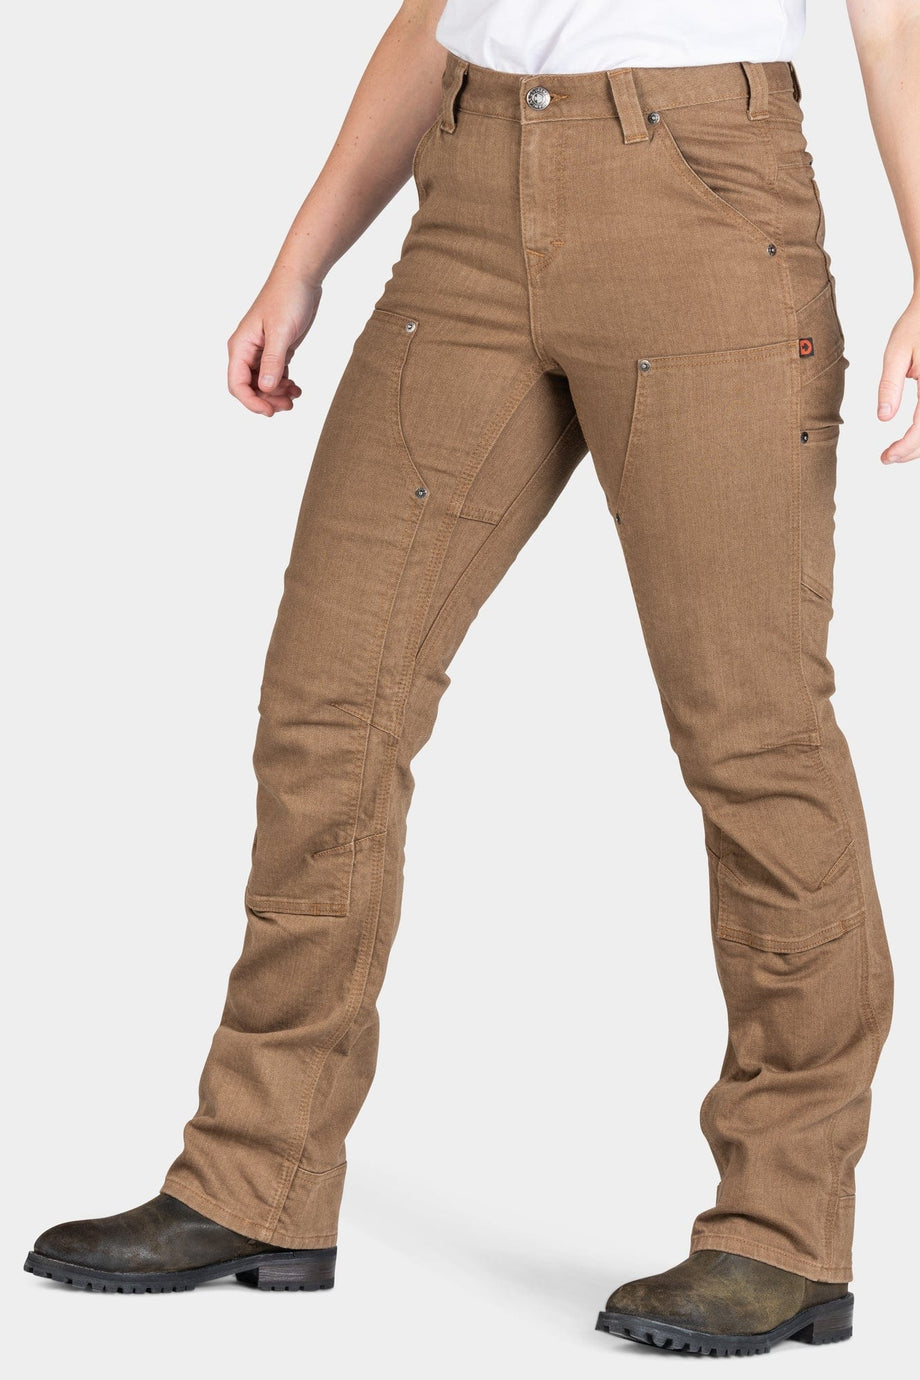 Women’s Carhartt Brown Work Wear Thick Double Knee Cargo Pants - Size 18 x  32